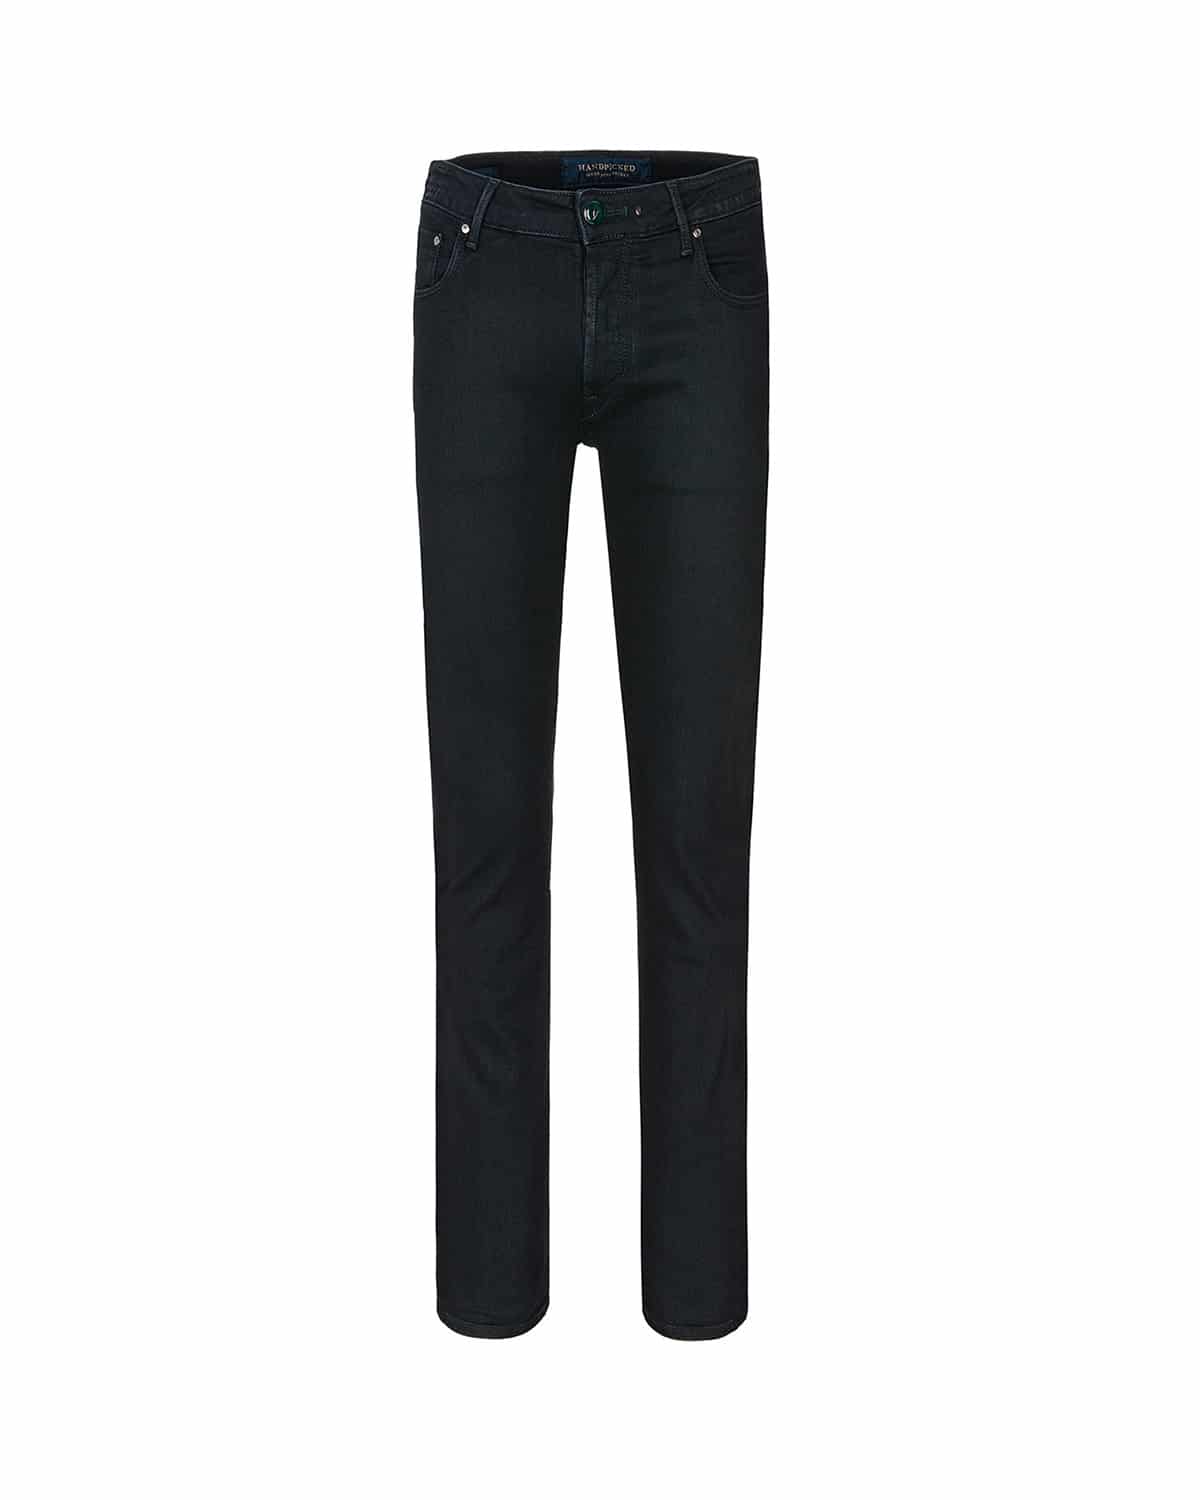 jeans handpicked noir stretch